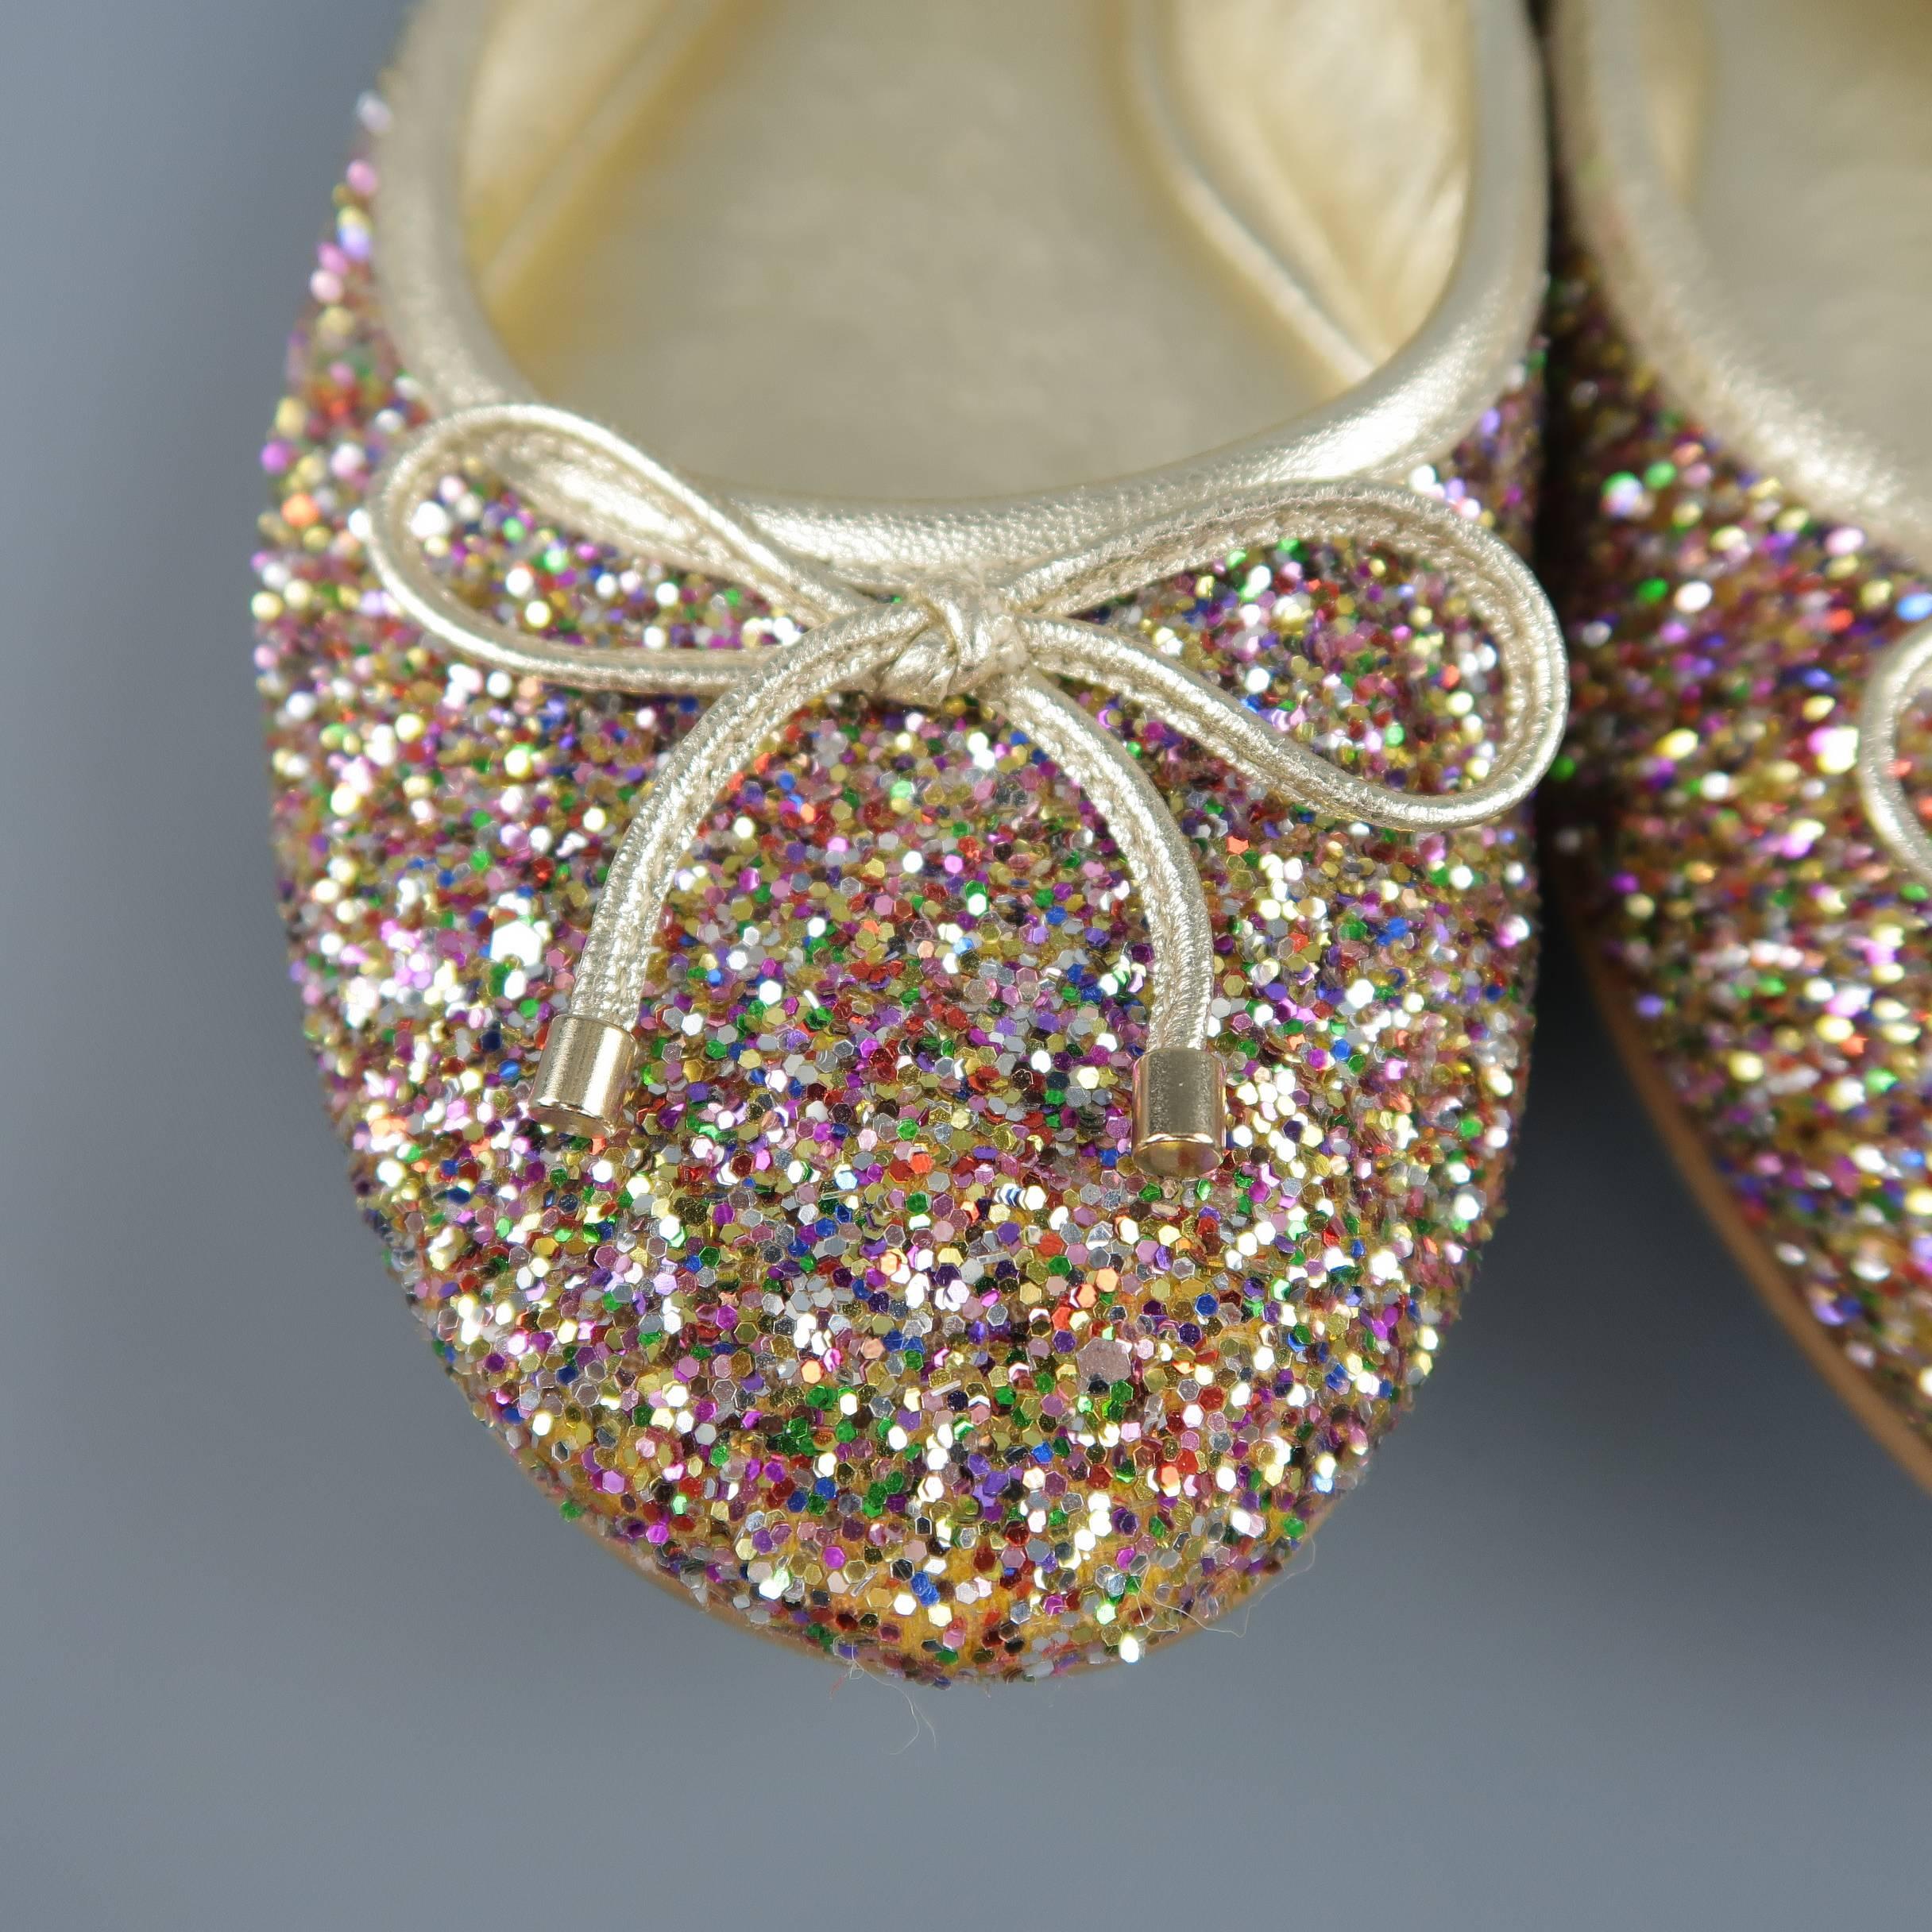 Women's JIMMY CHOO Size 8 Gold Leather Multi Color Glitter Ballet Flats